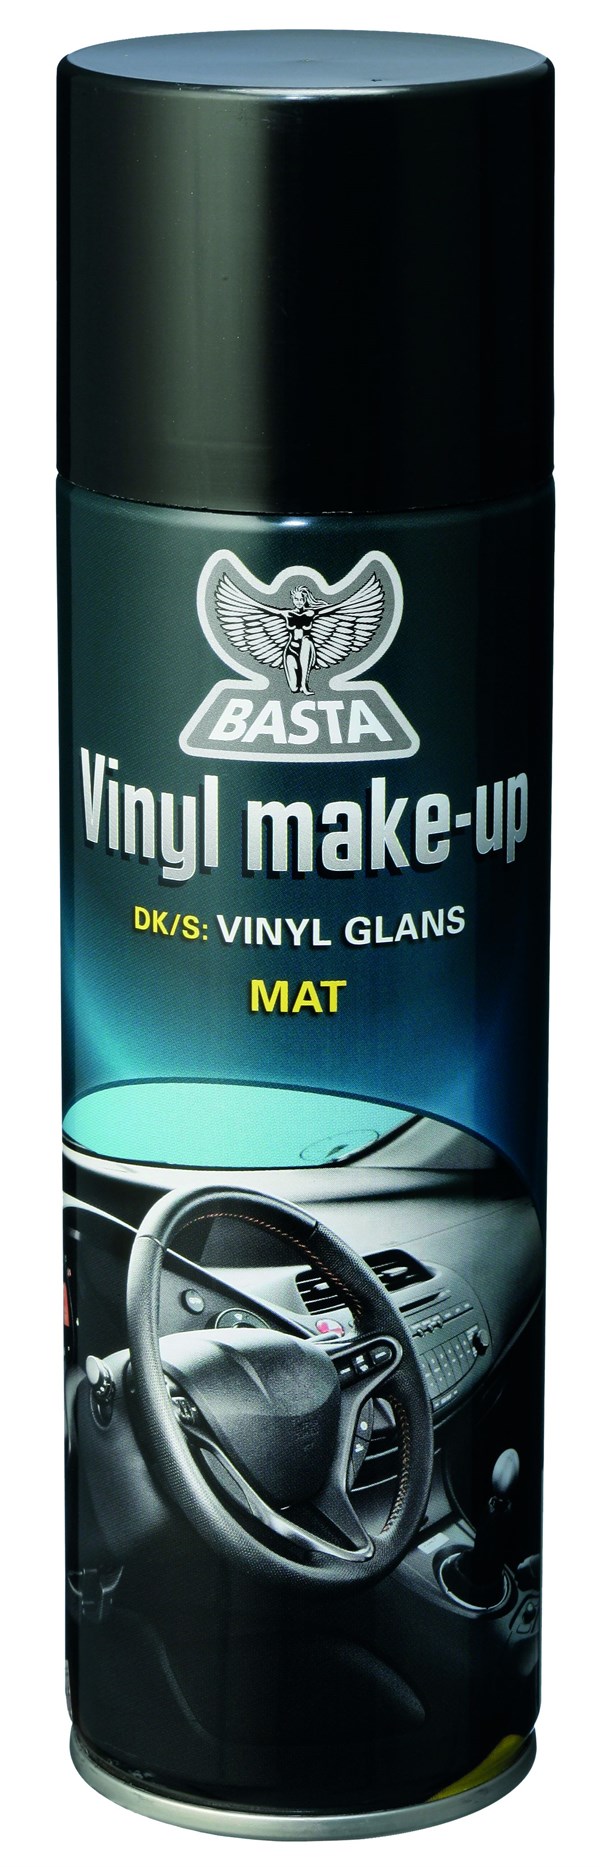 Basta Vinyl Makeup Mat 300ml